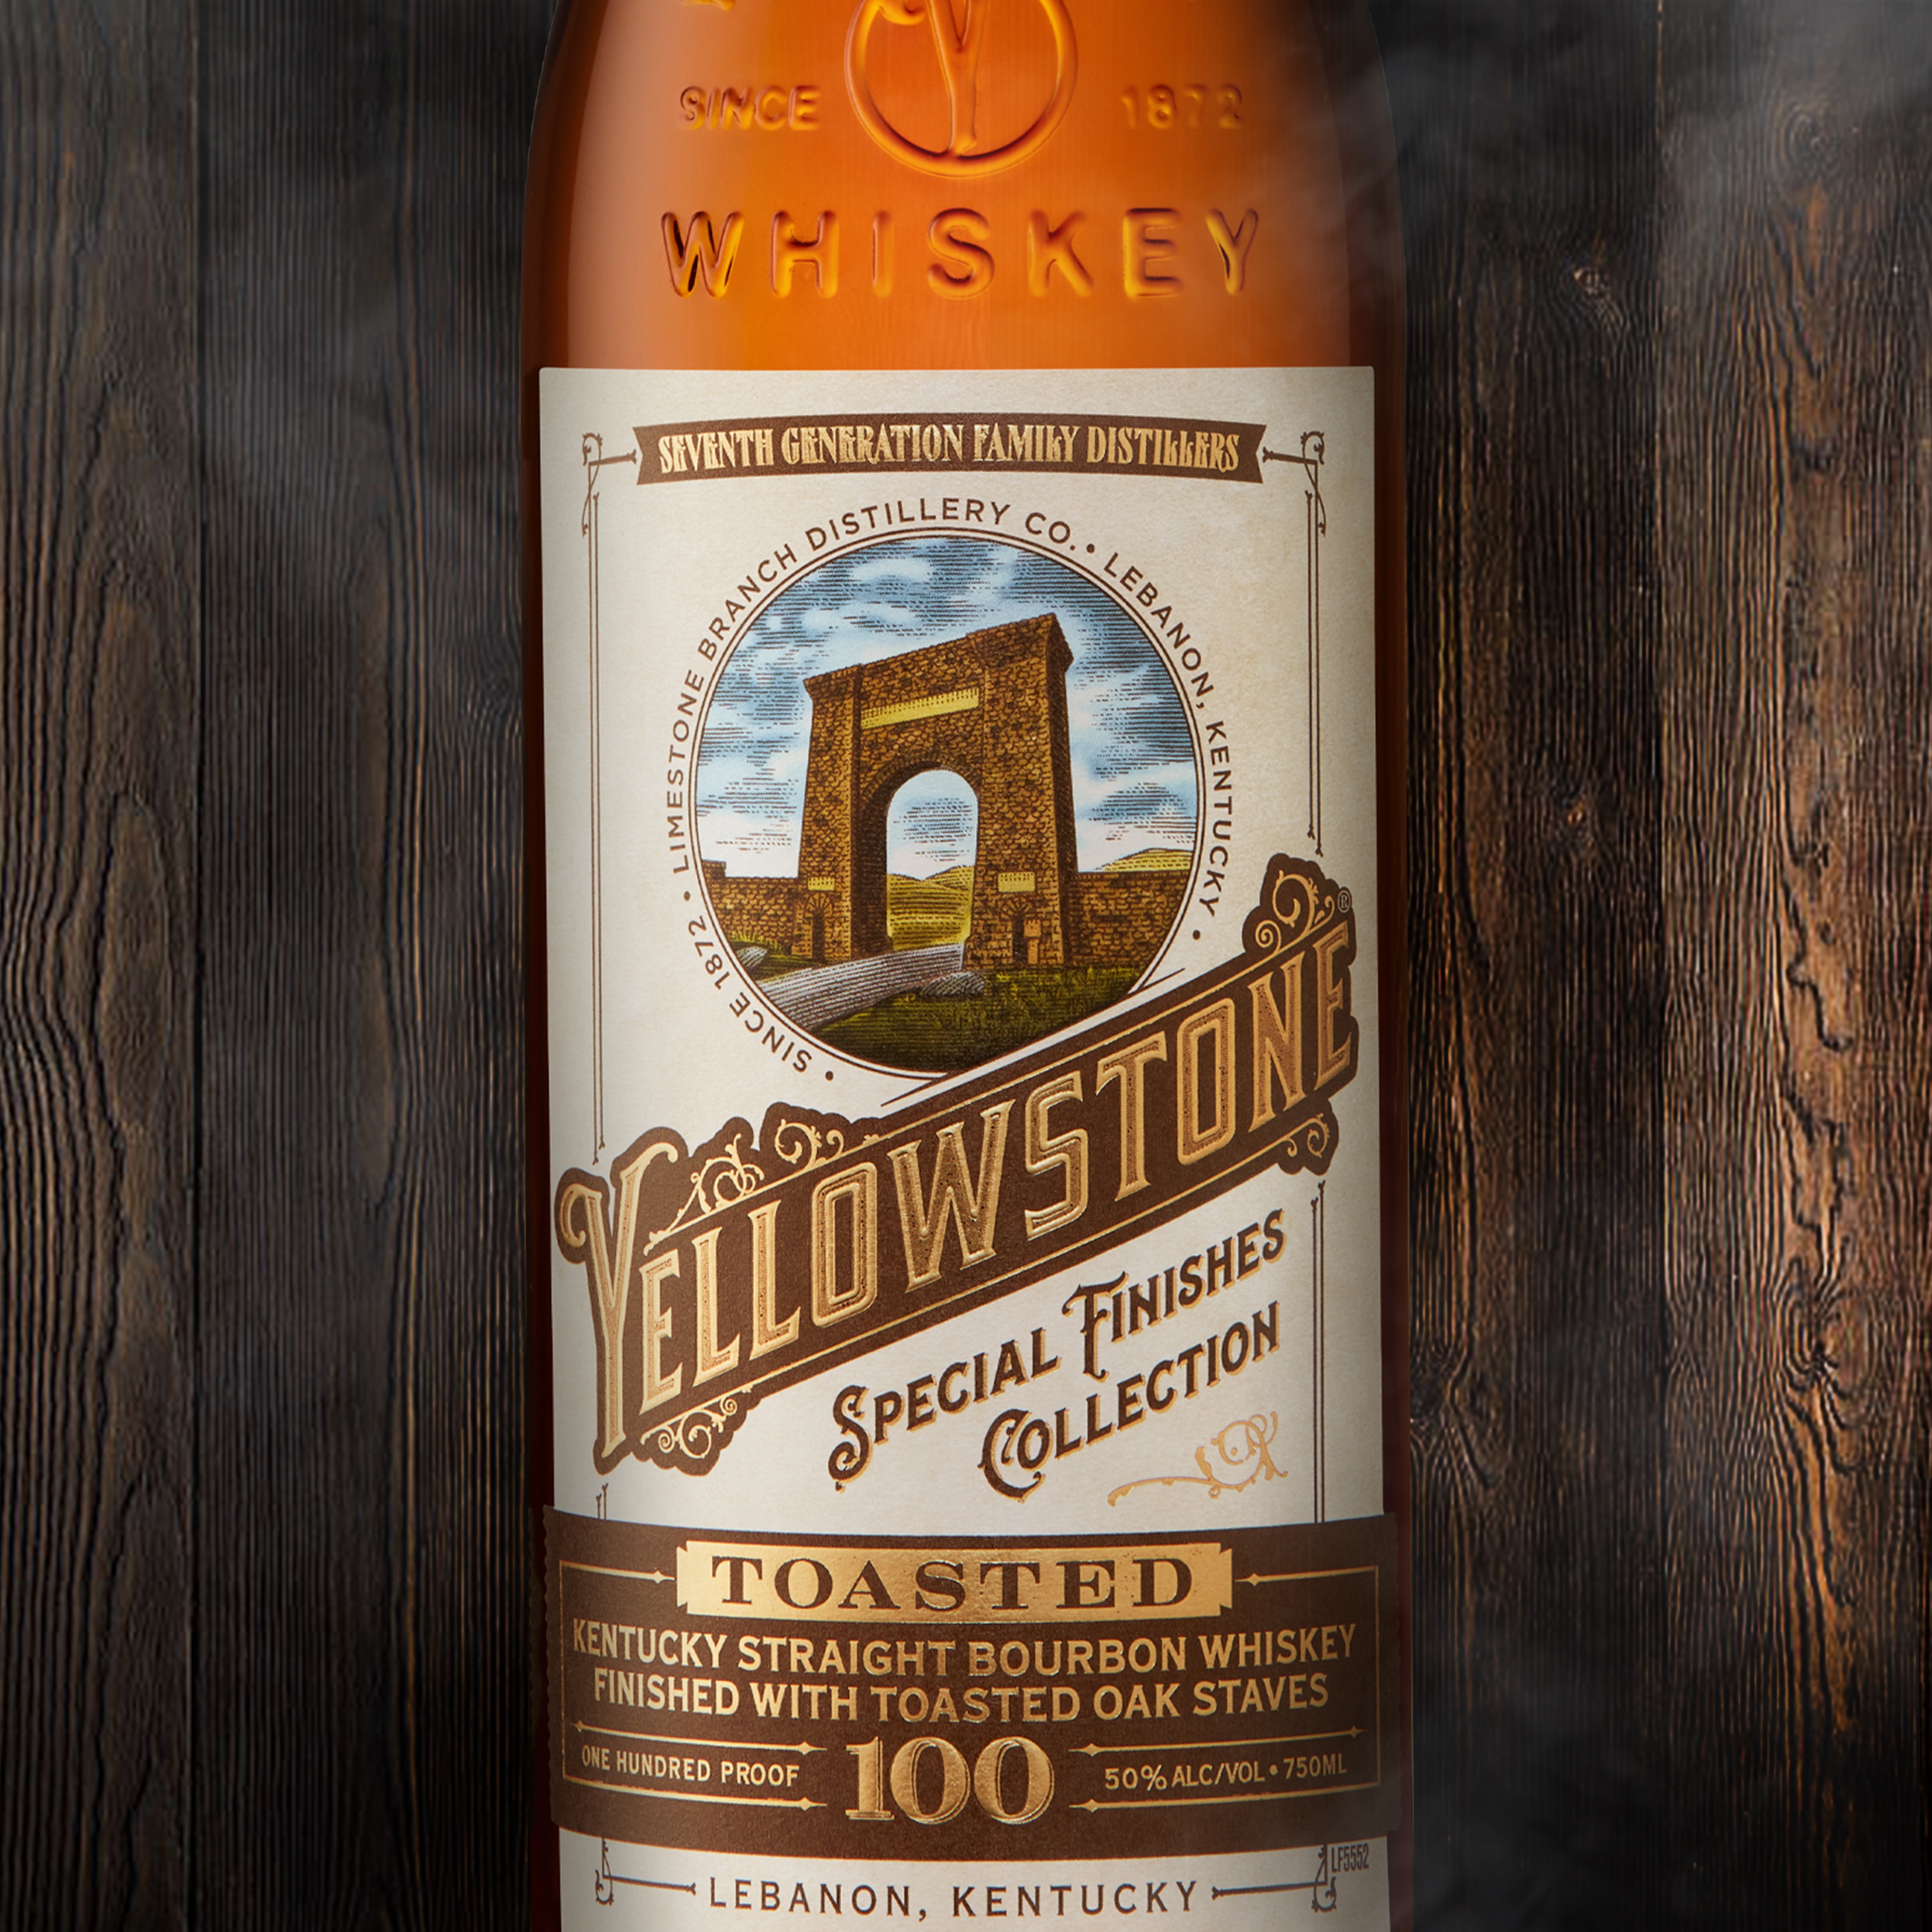 Yellowstone Bourbon Announces New Toasted Finish